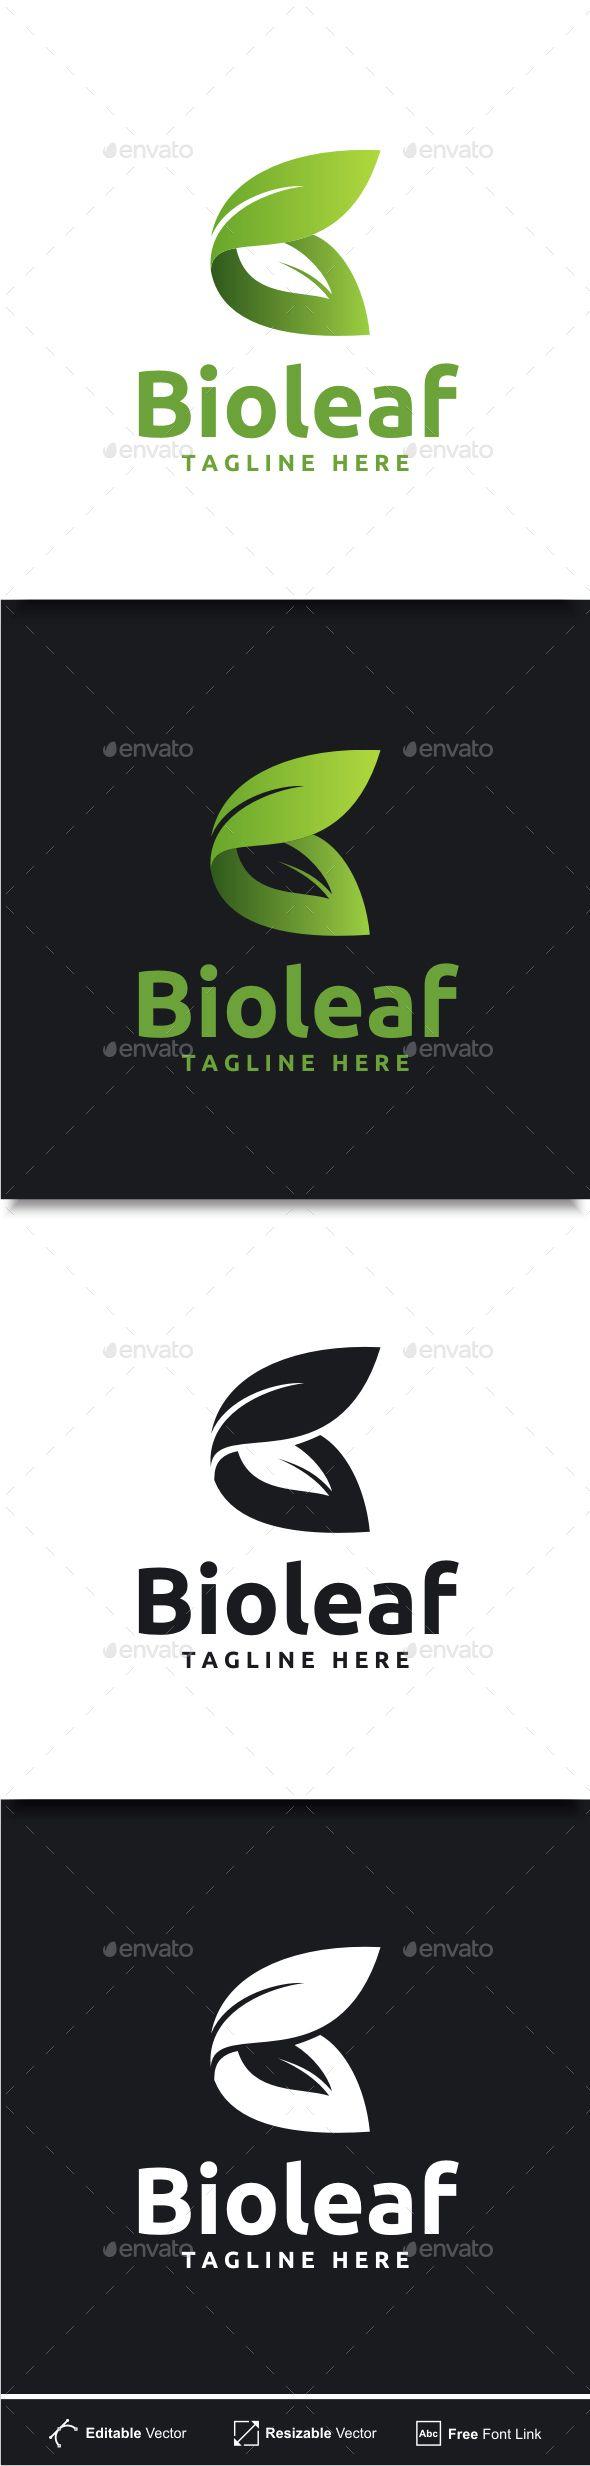 Leaf Letter B Logo - Bio Leaf - Letter B Logo | Projects to Try | Pinterest | Logos, Logo ...